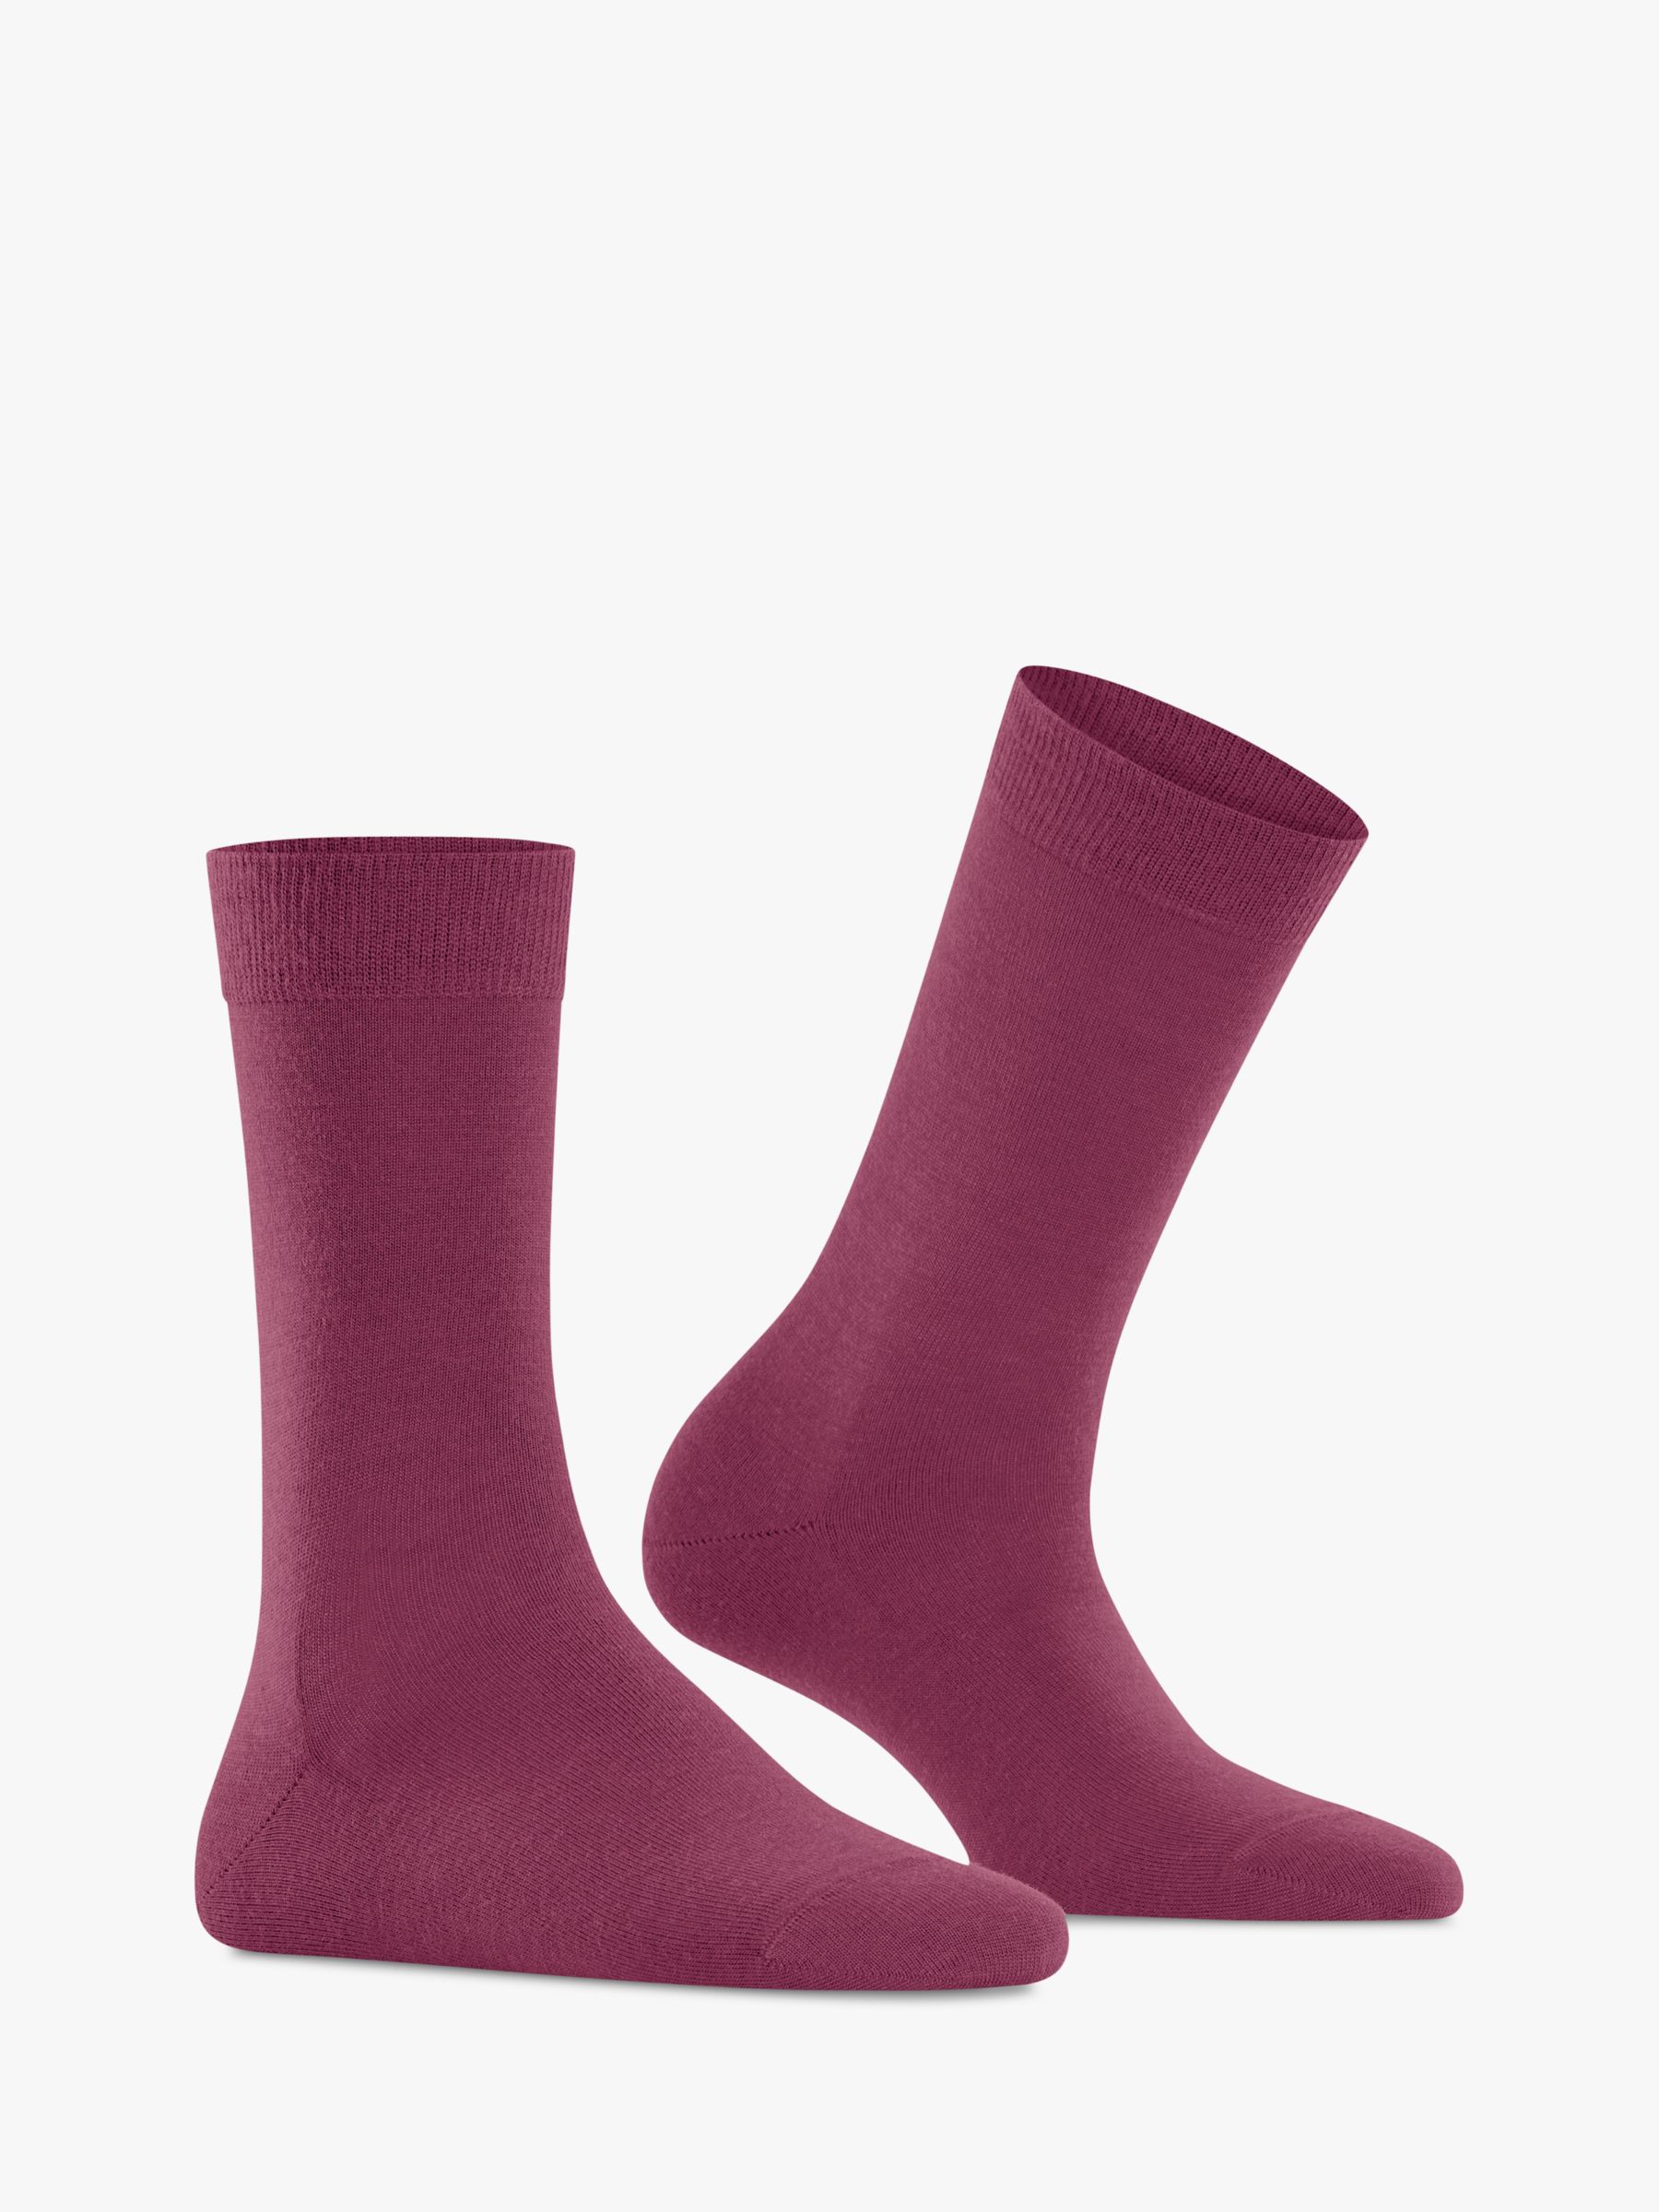 Falke Soft Merino and Cotton Ankle Socks